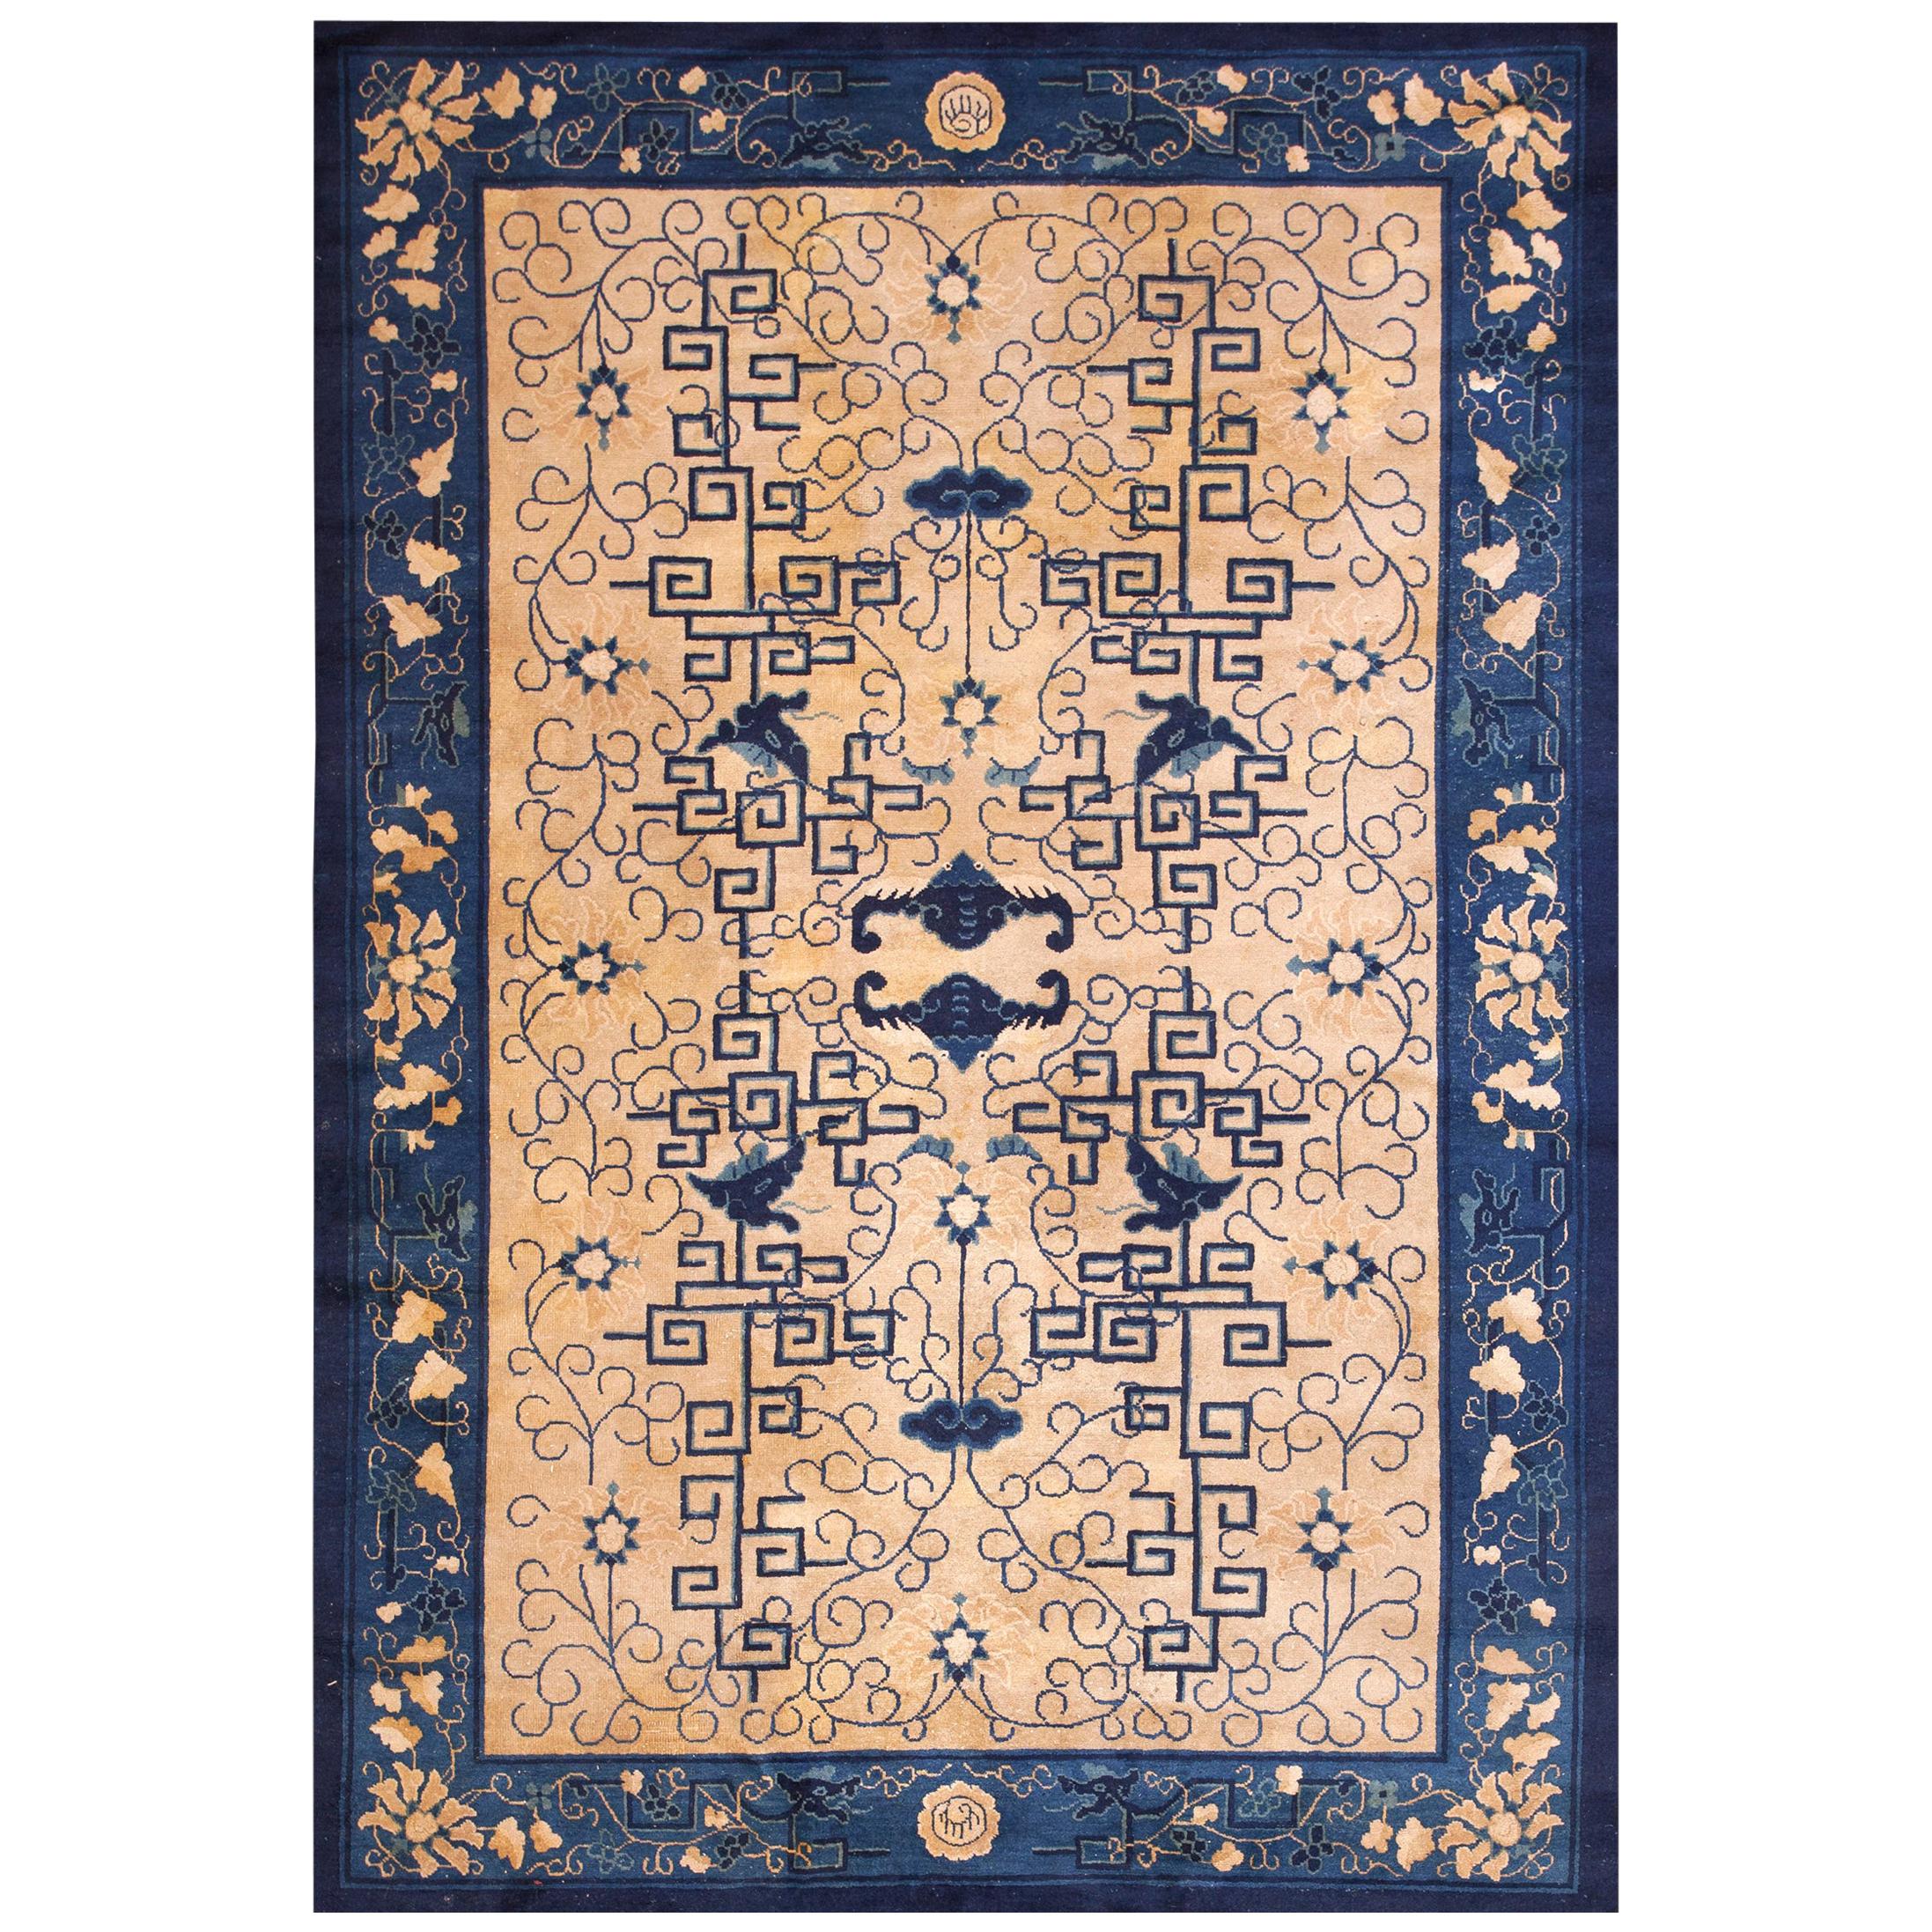 Early 20th Century Chinese Peking Carpet ( 6'2" x 8'9" - 188 x 267 )